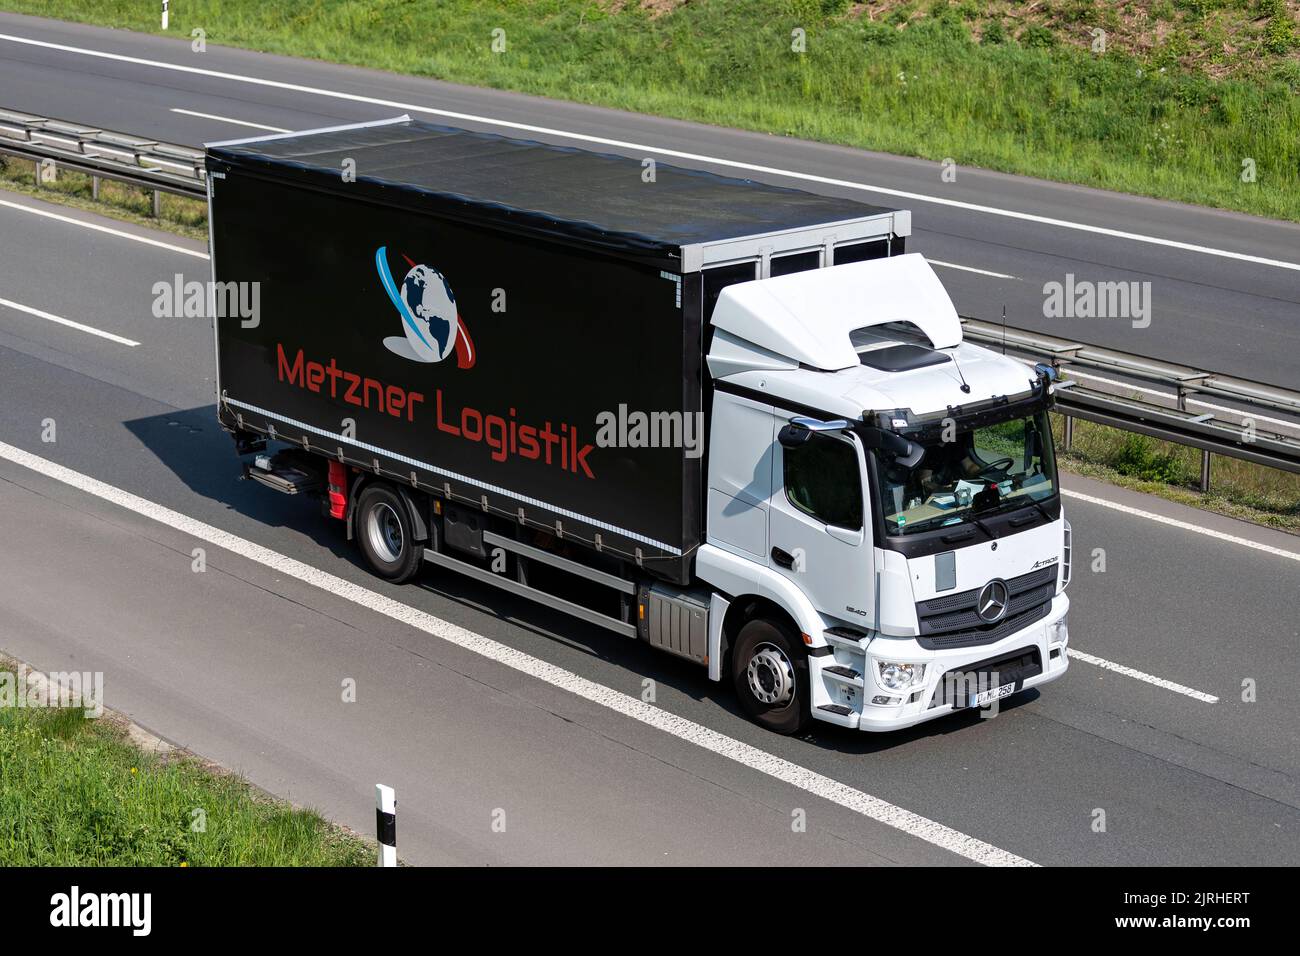 Metzner Logistik Mercedes-Benz Actros truck on motorway Stock Photo